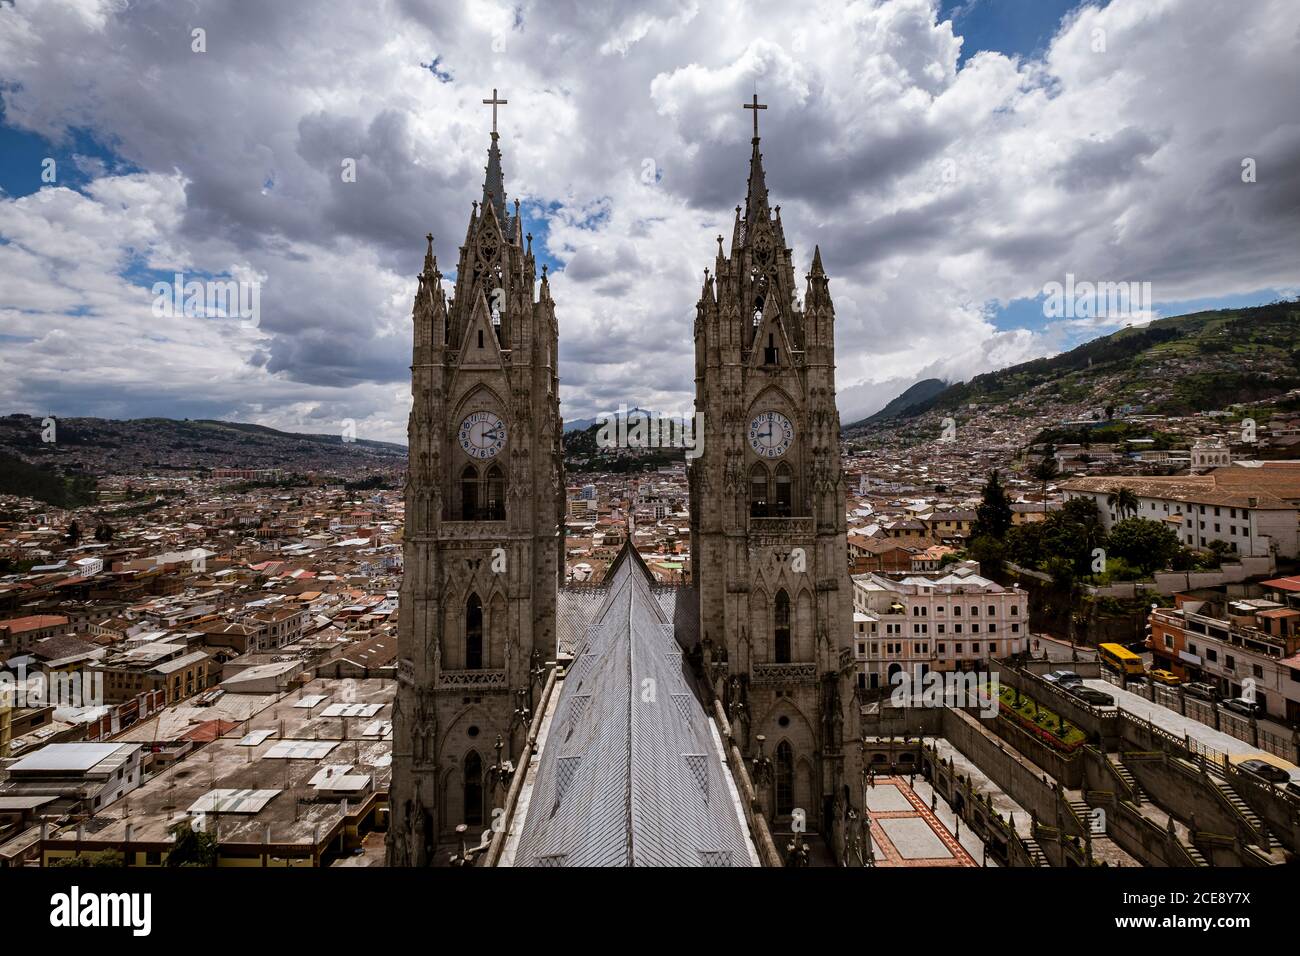 Basilica del Voto National im Stadtzentrum von Quito. Stockfoto